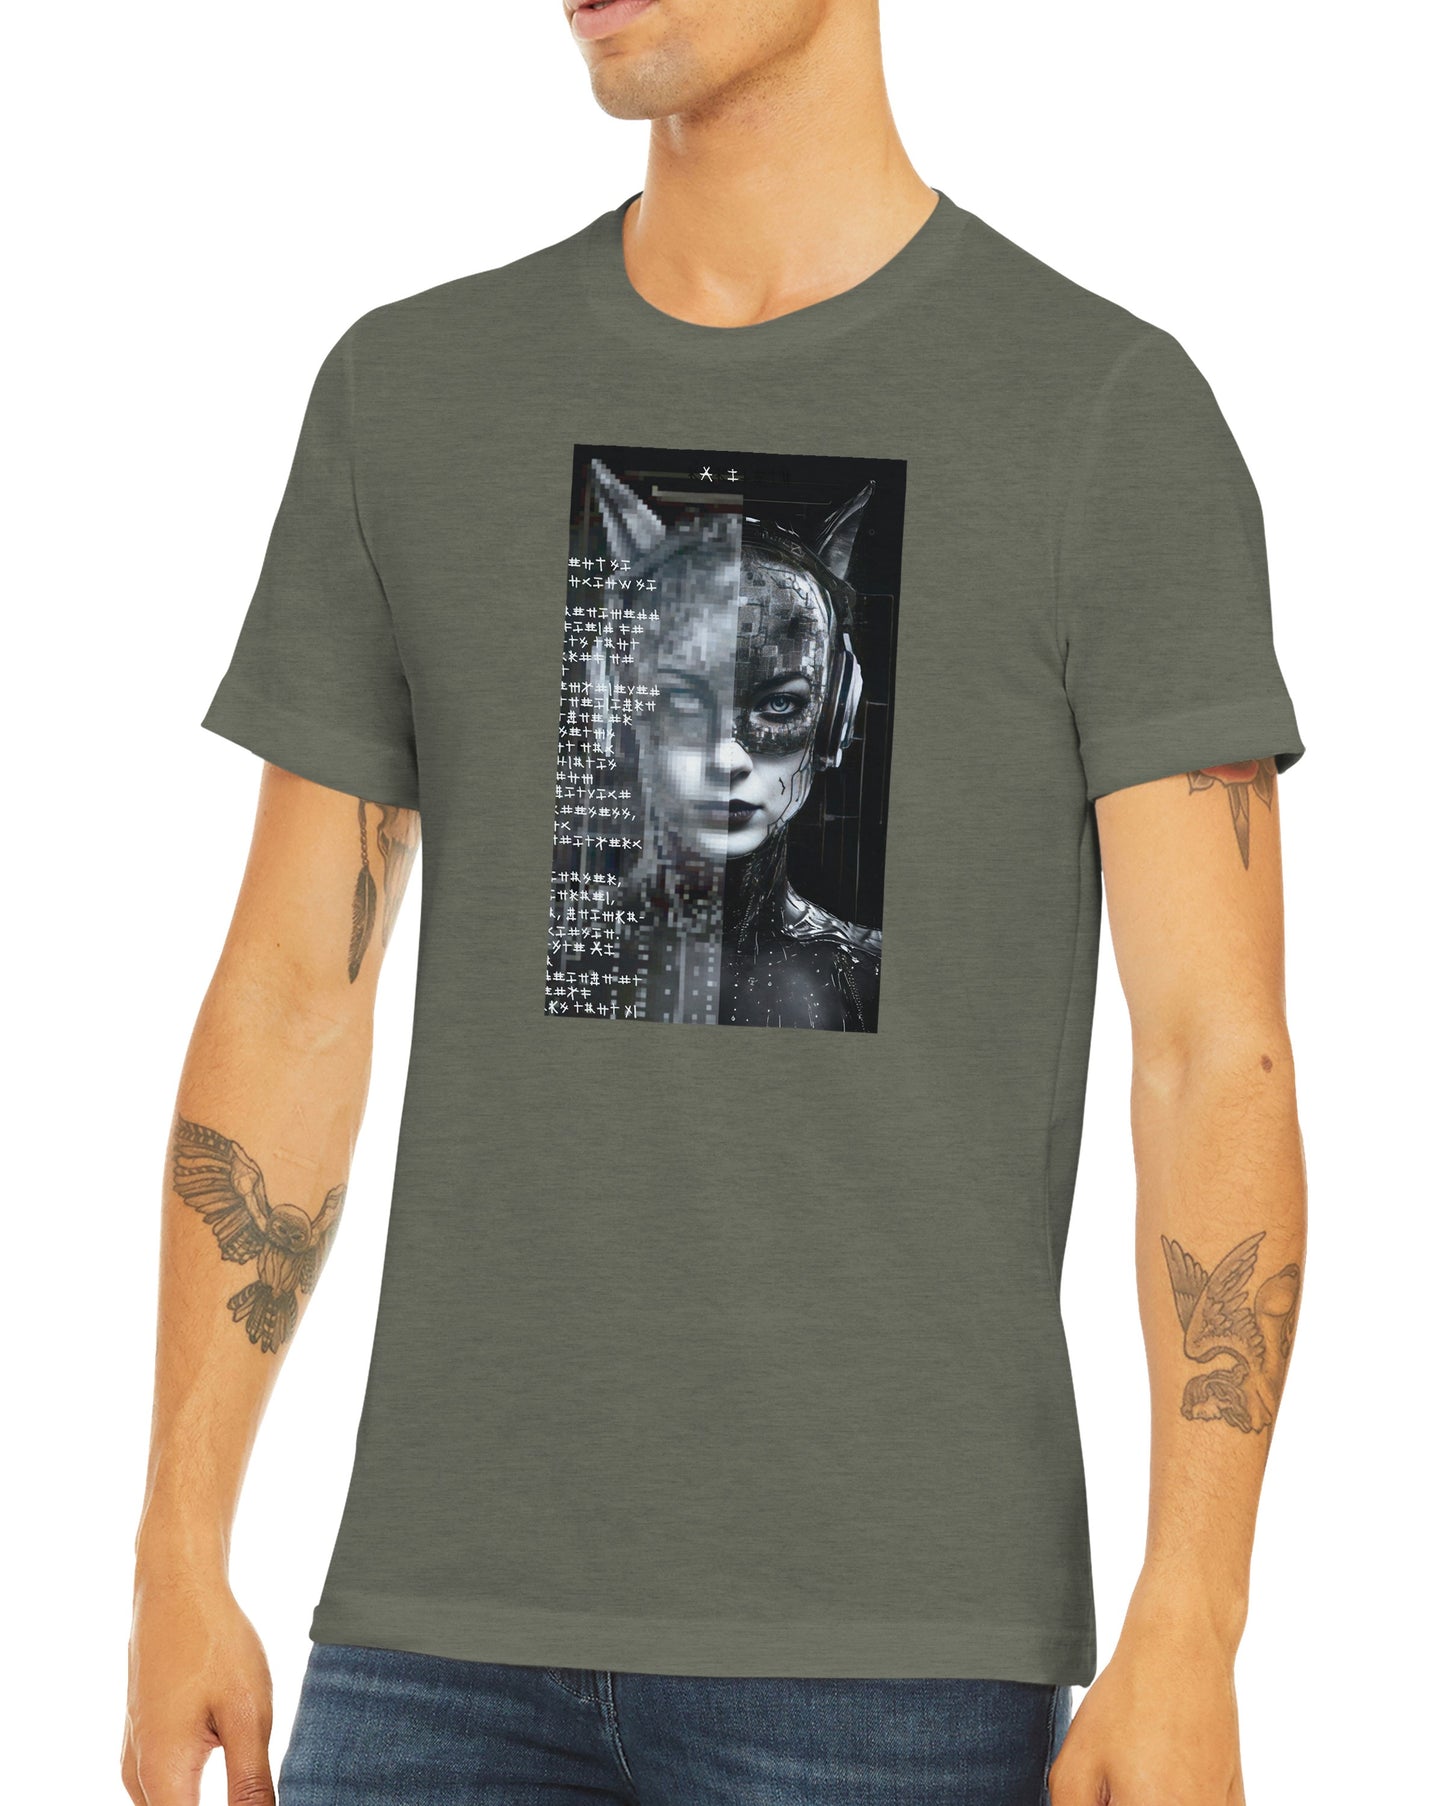 CAT WOMAN 2050 Unisex Triblend T-Shirt